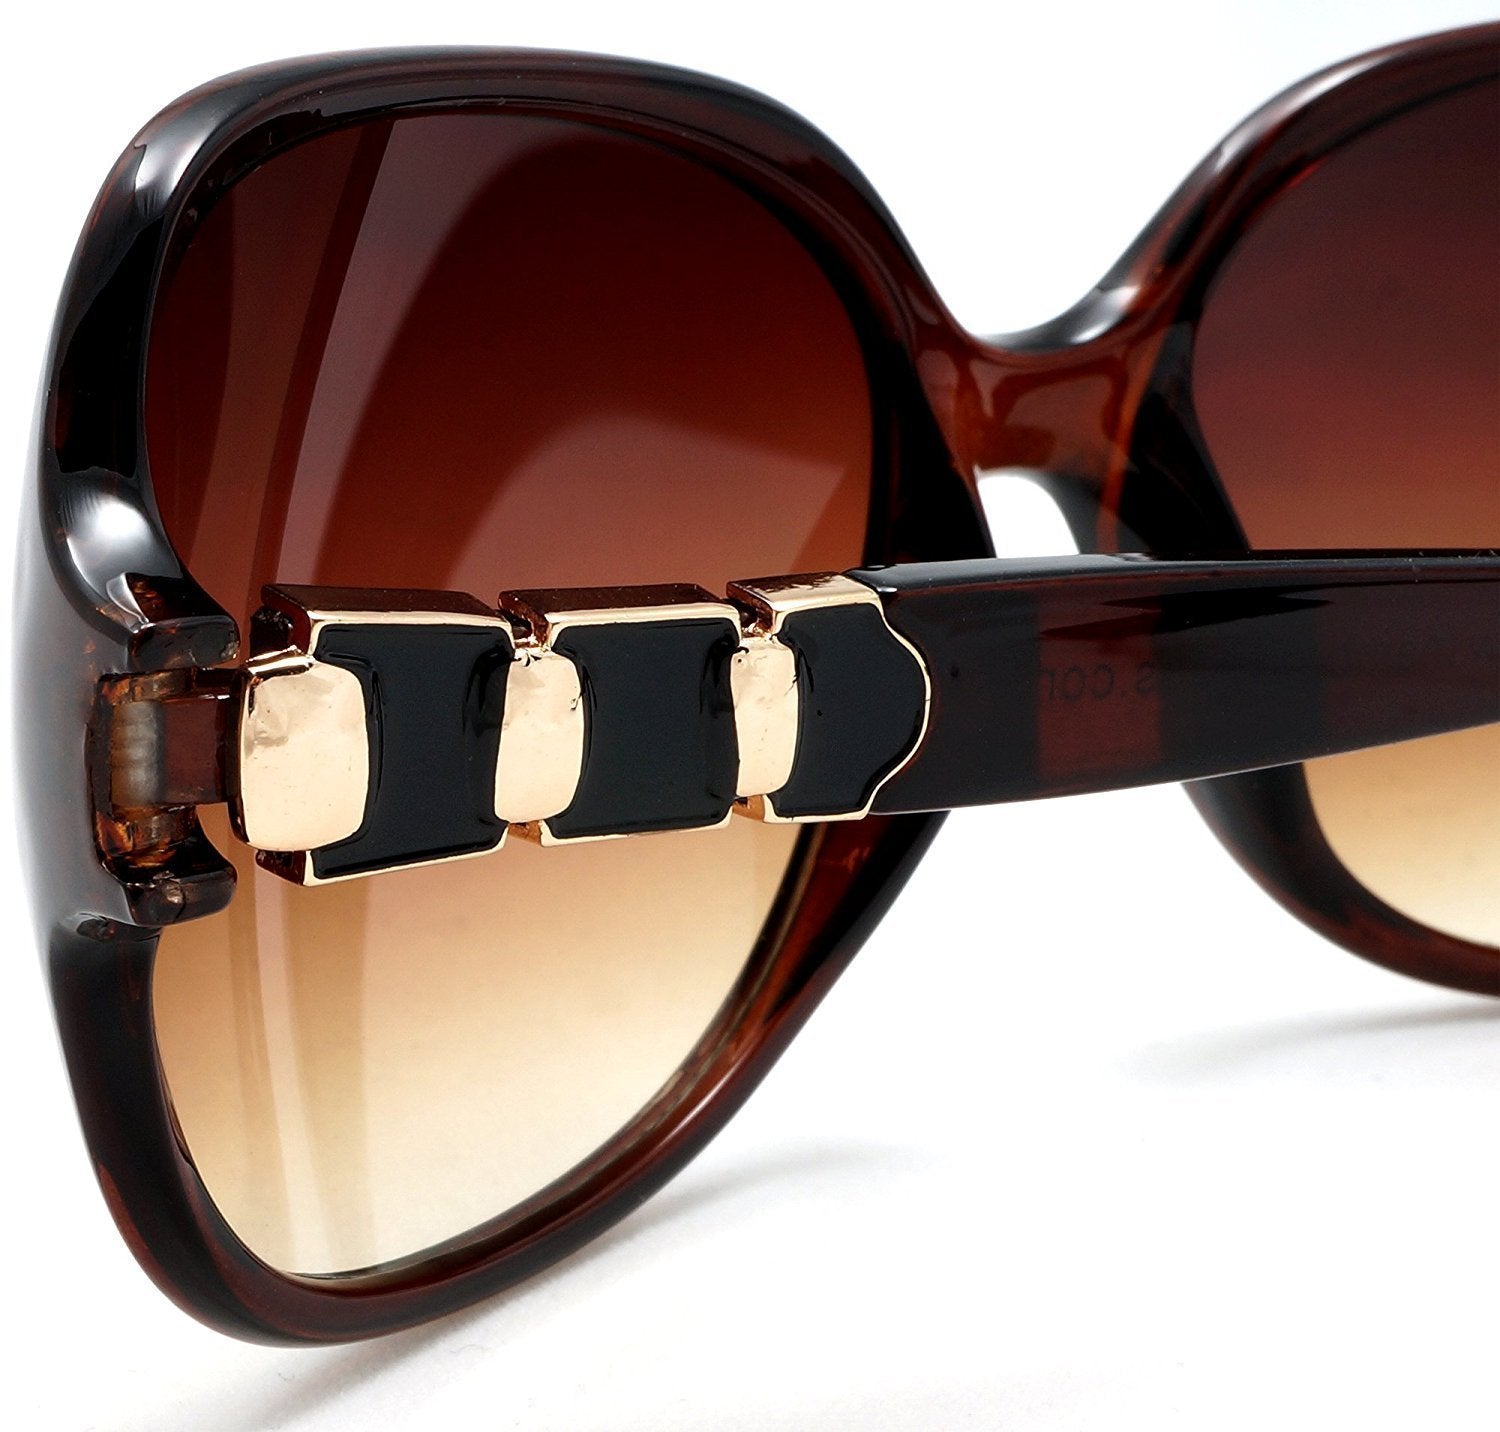 Women's Oversized Fashion Classic Polarized Sunglasses - Bombshell - Brown - image 4 of 6